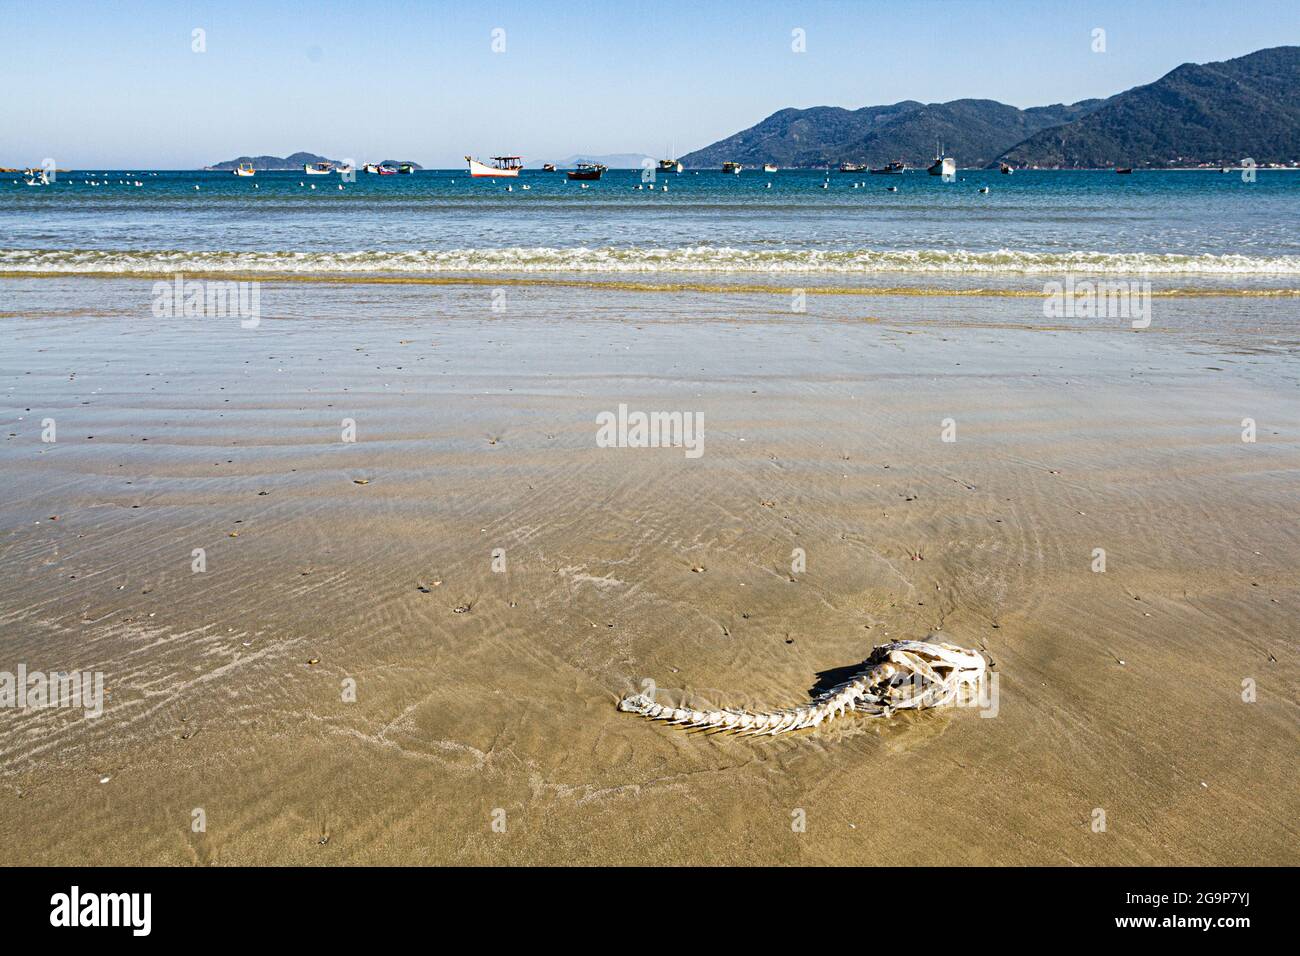 Fish bone on the sand at Pantano do Sul Beach. Florianopolis, Santa Catarina, Brazil. Stock Photo